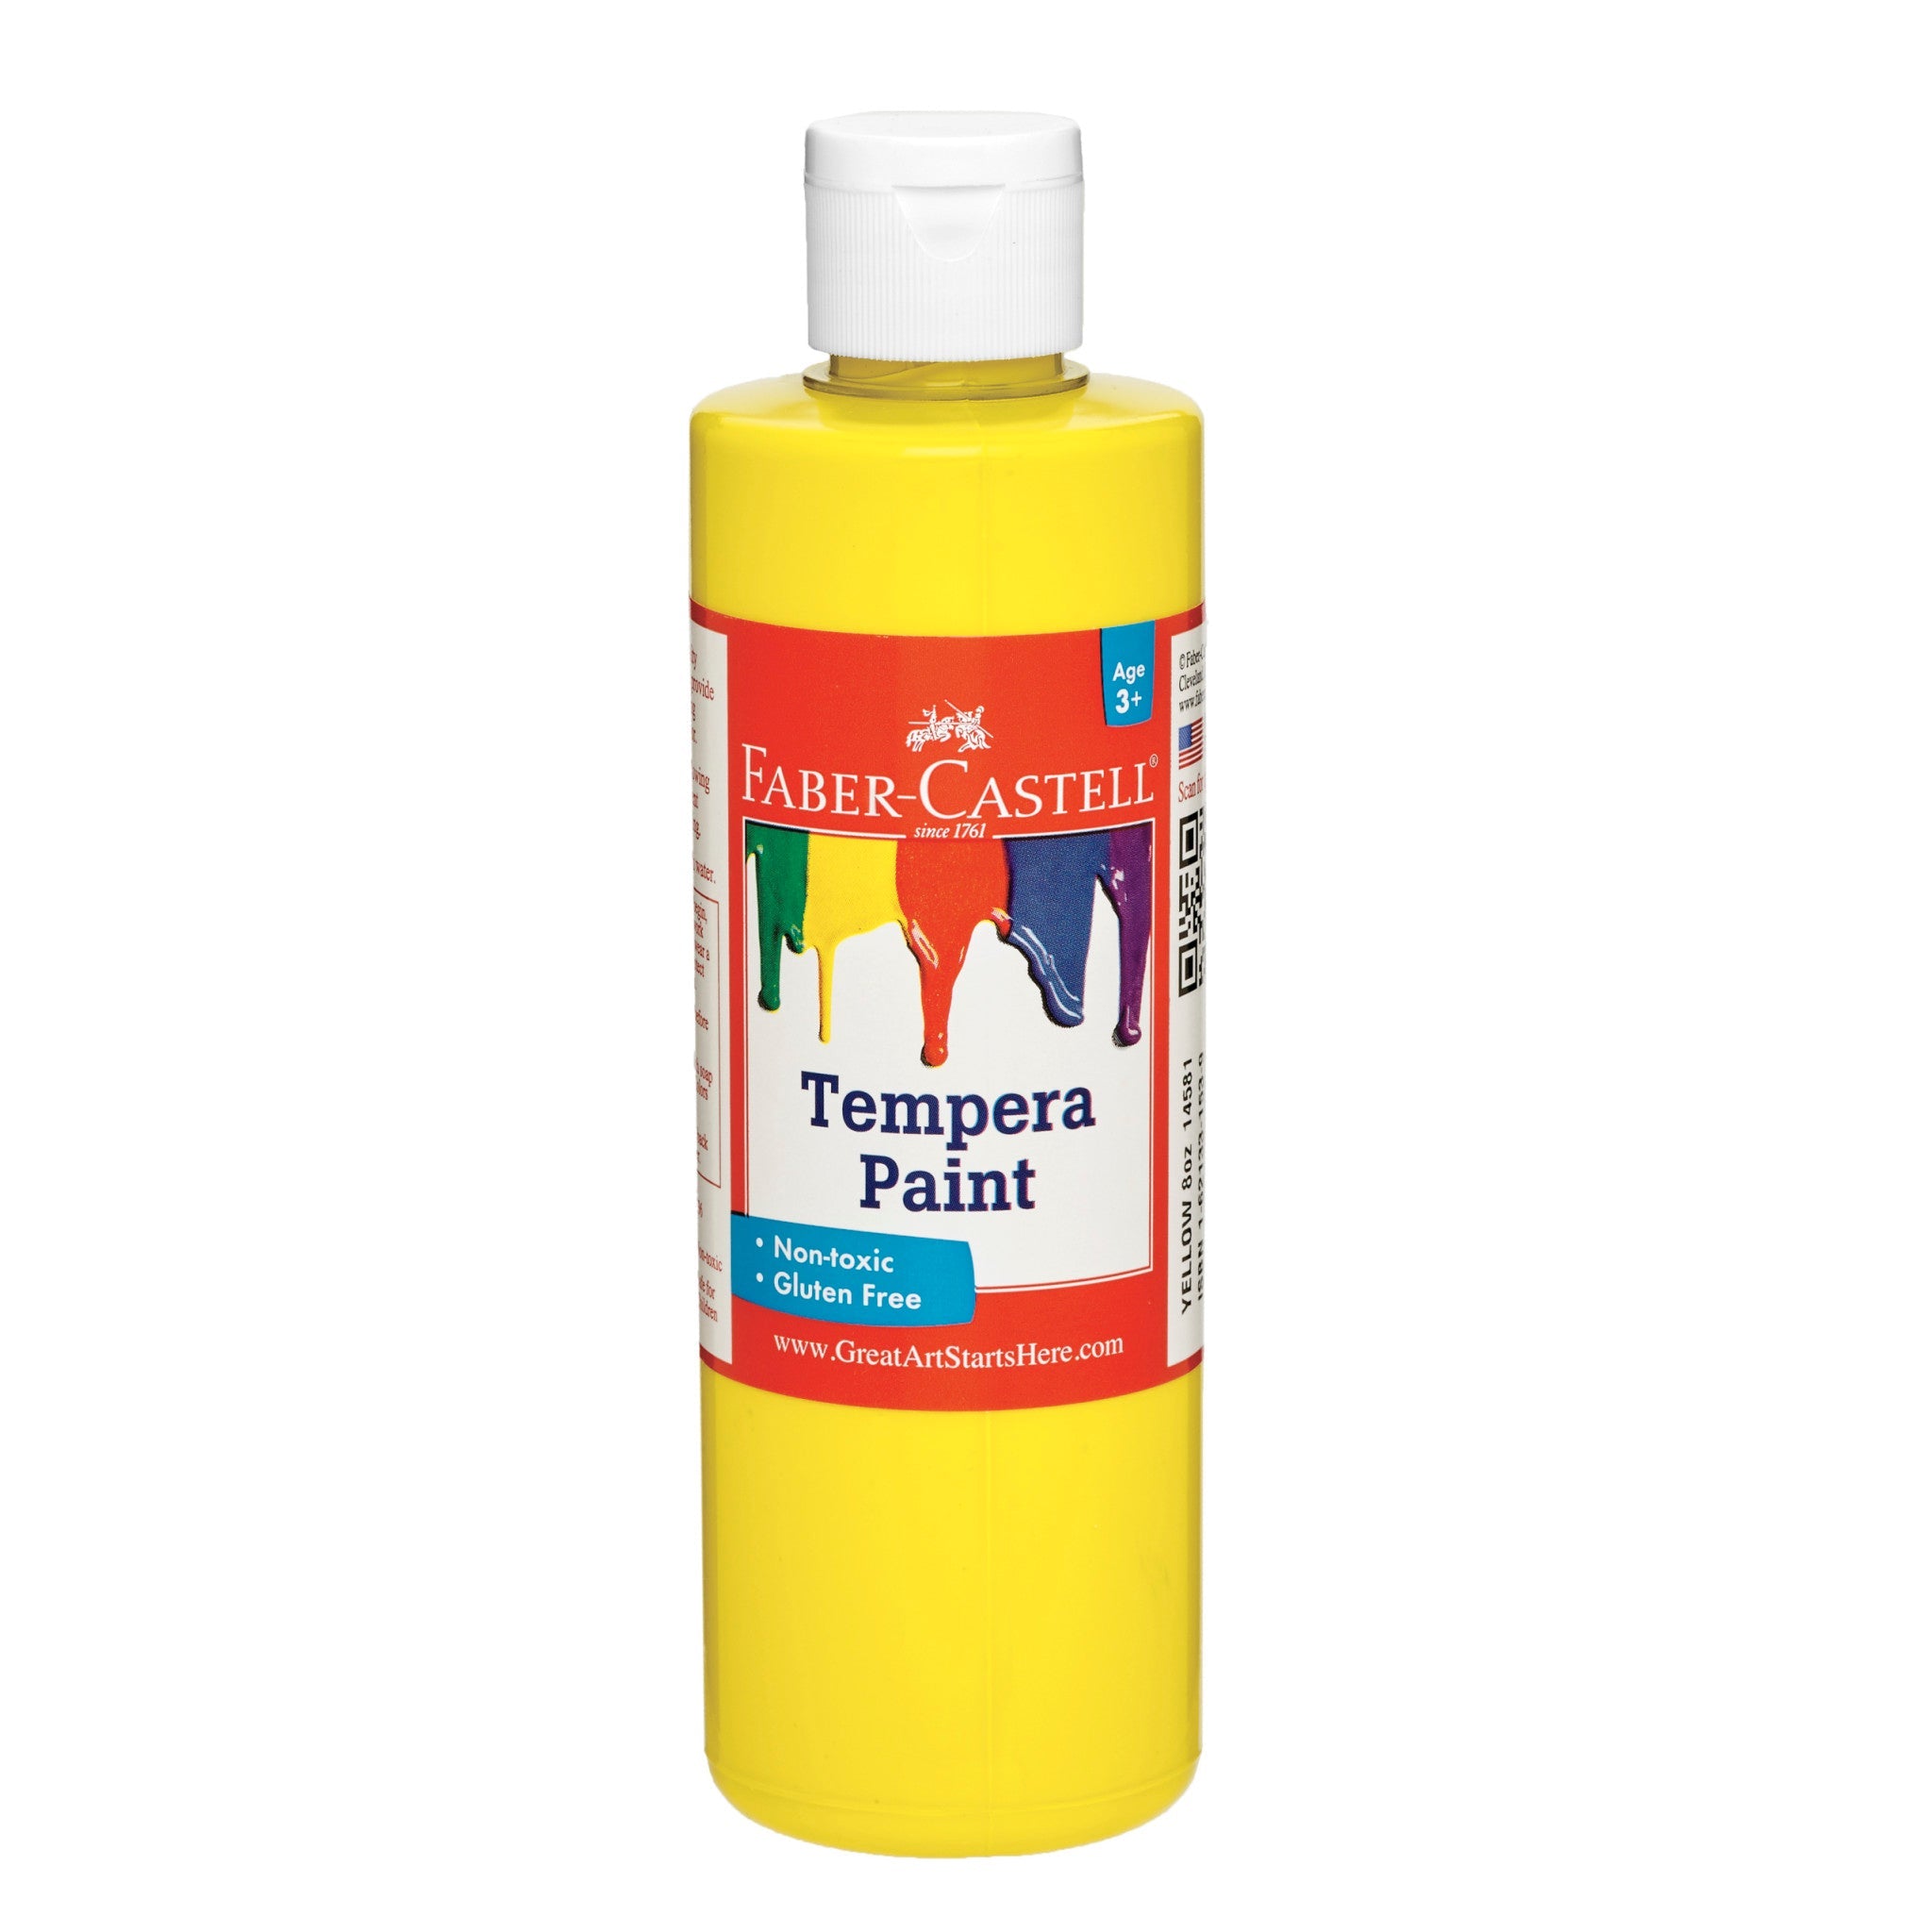 EXTRIC Washable Paint for Kids - 12 Count Finger Paint (2 oz Each) Tempera Paint - Non Toxic Kids Paint for Art, Craft - Kids Paint